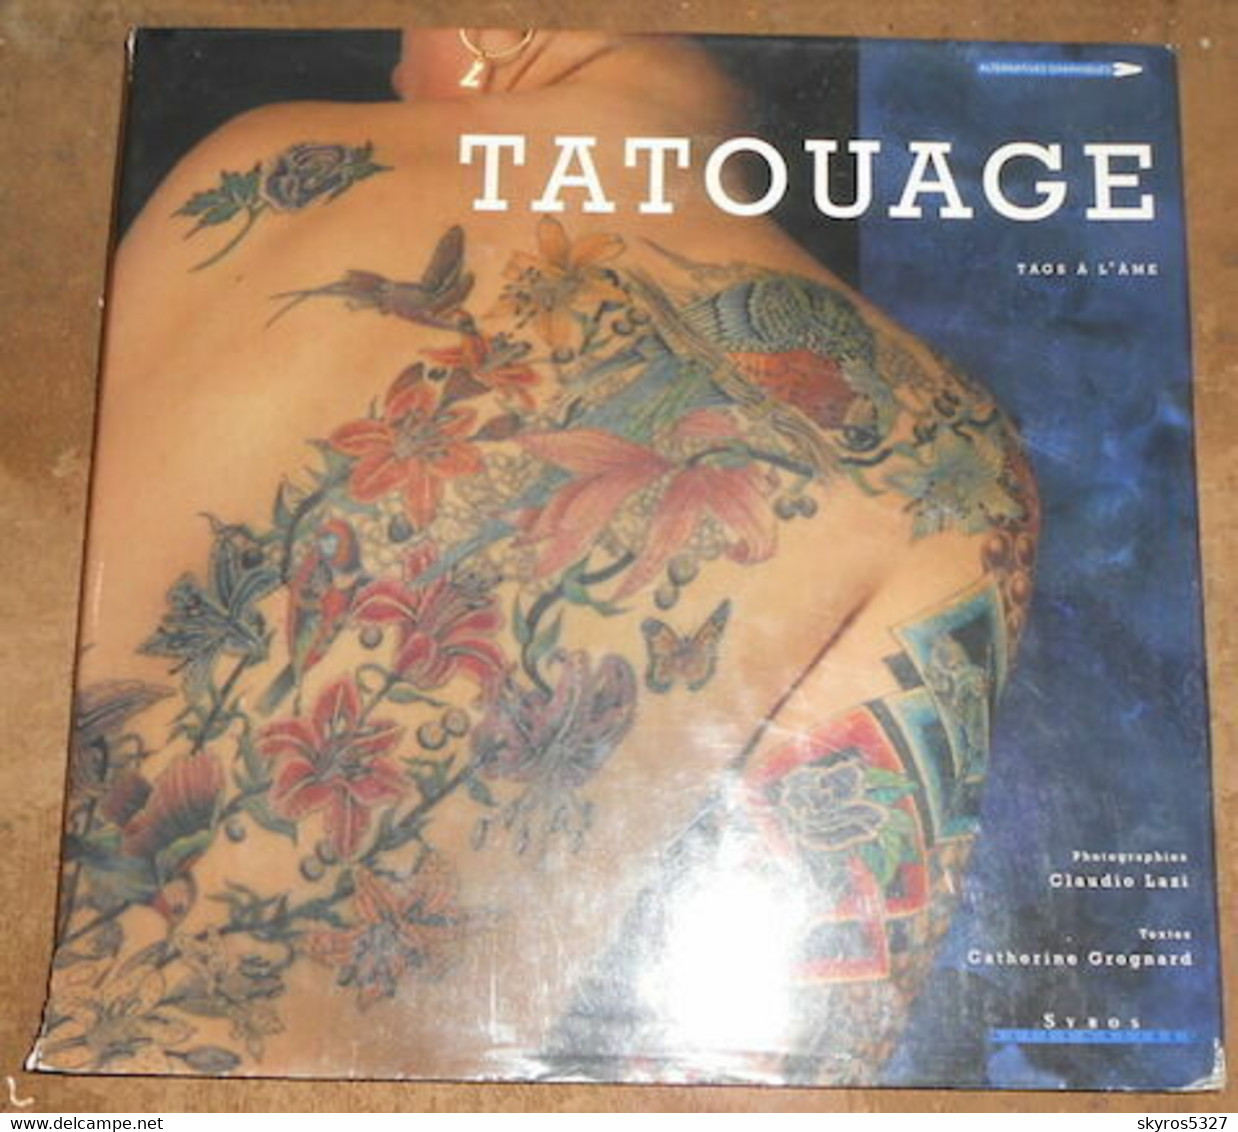 Tatouage Tags A L'Ame - French Authors